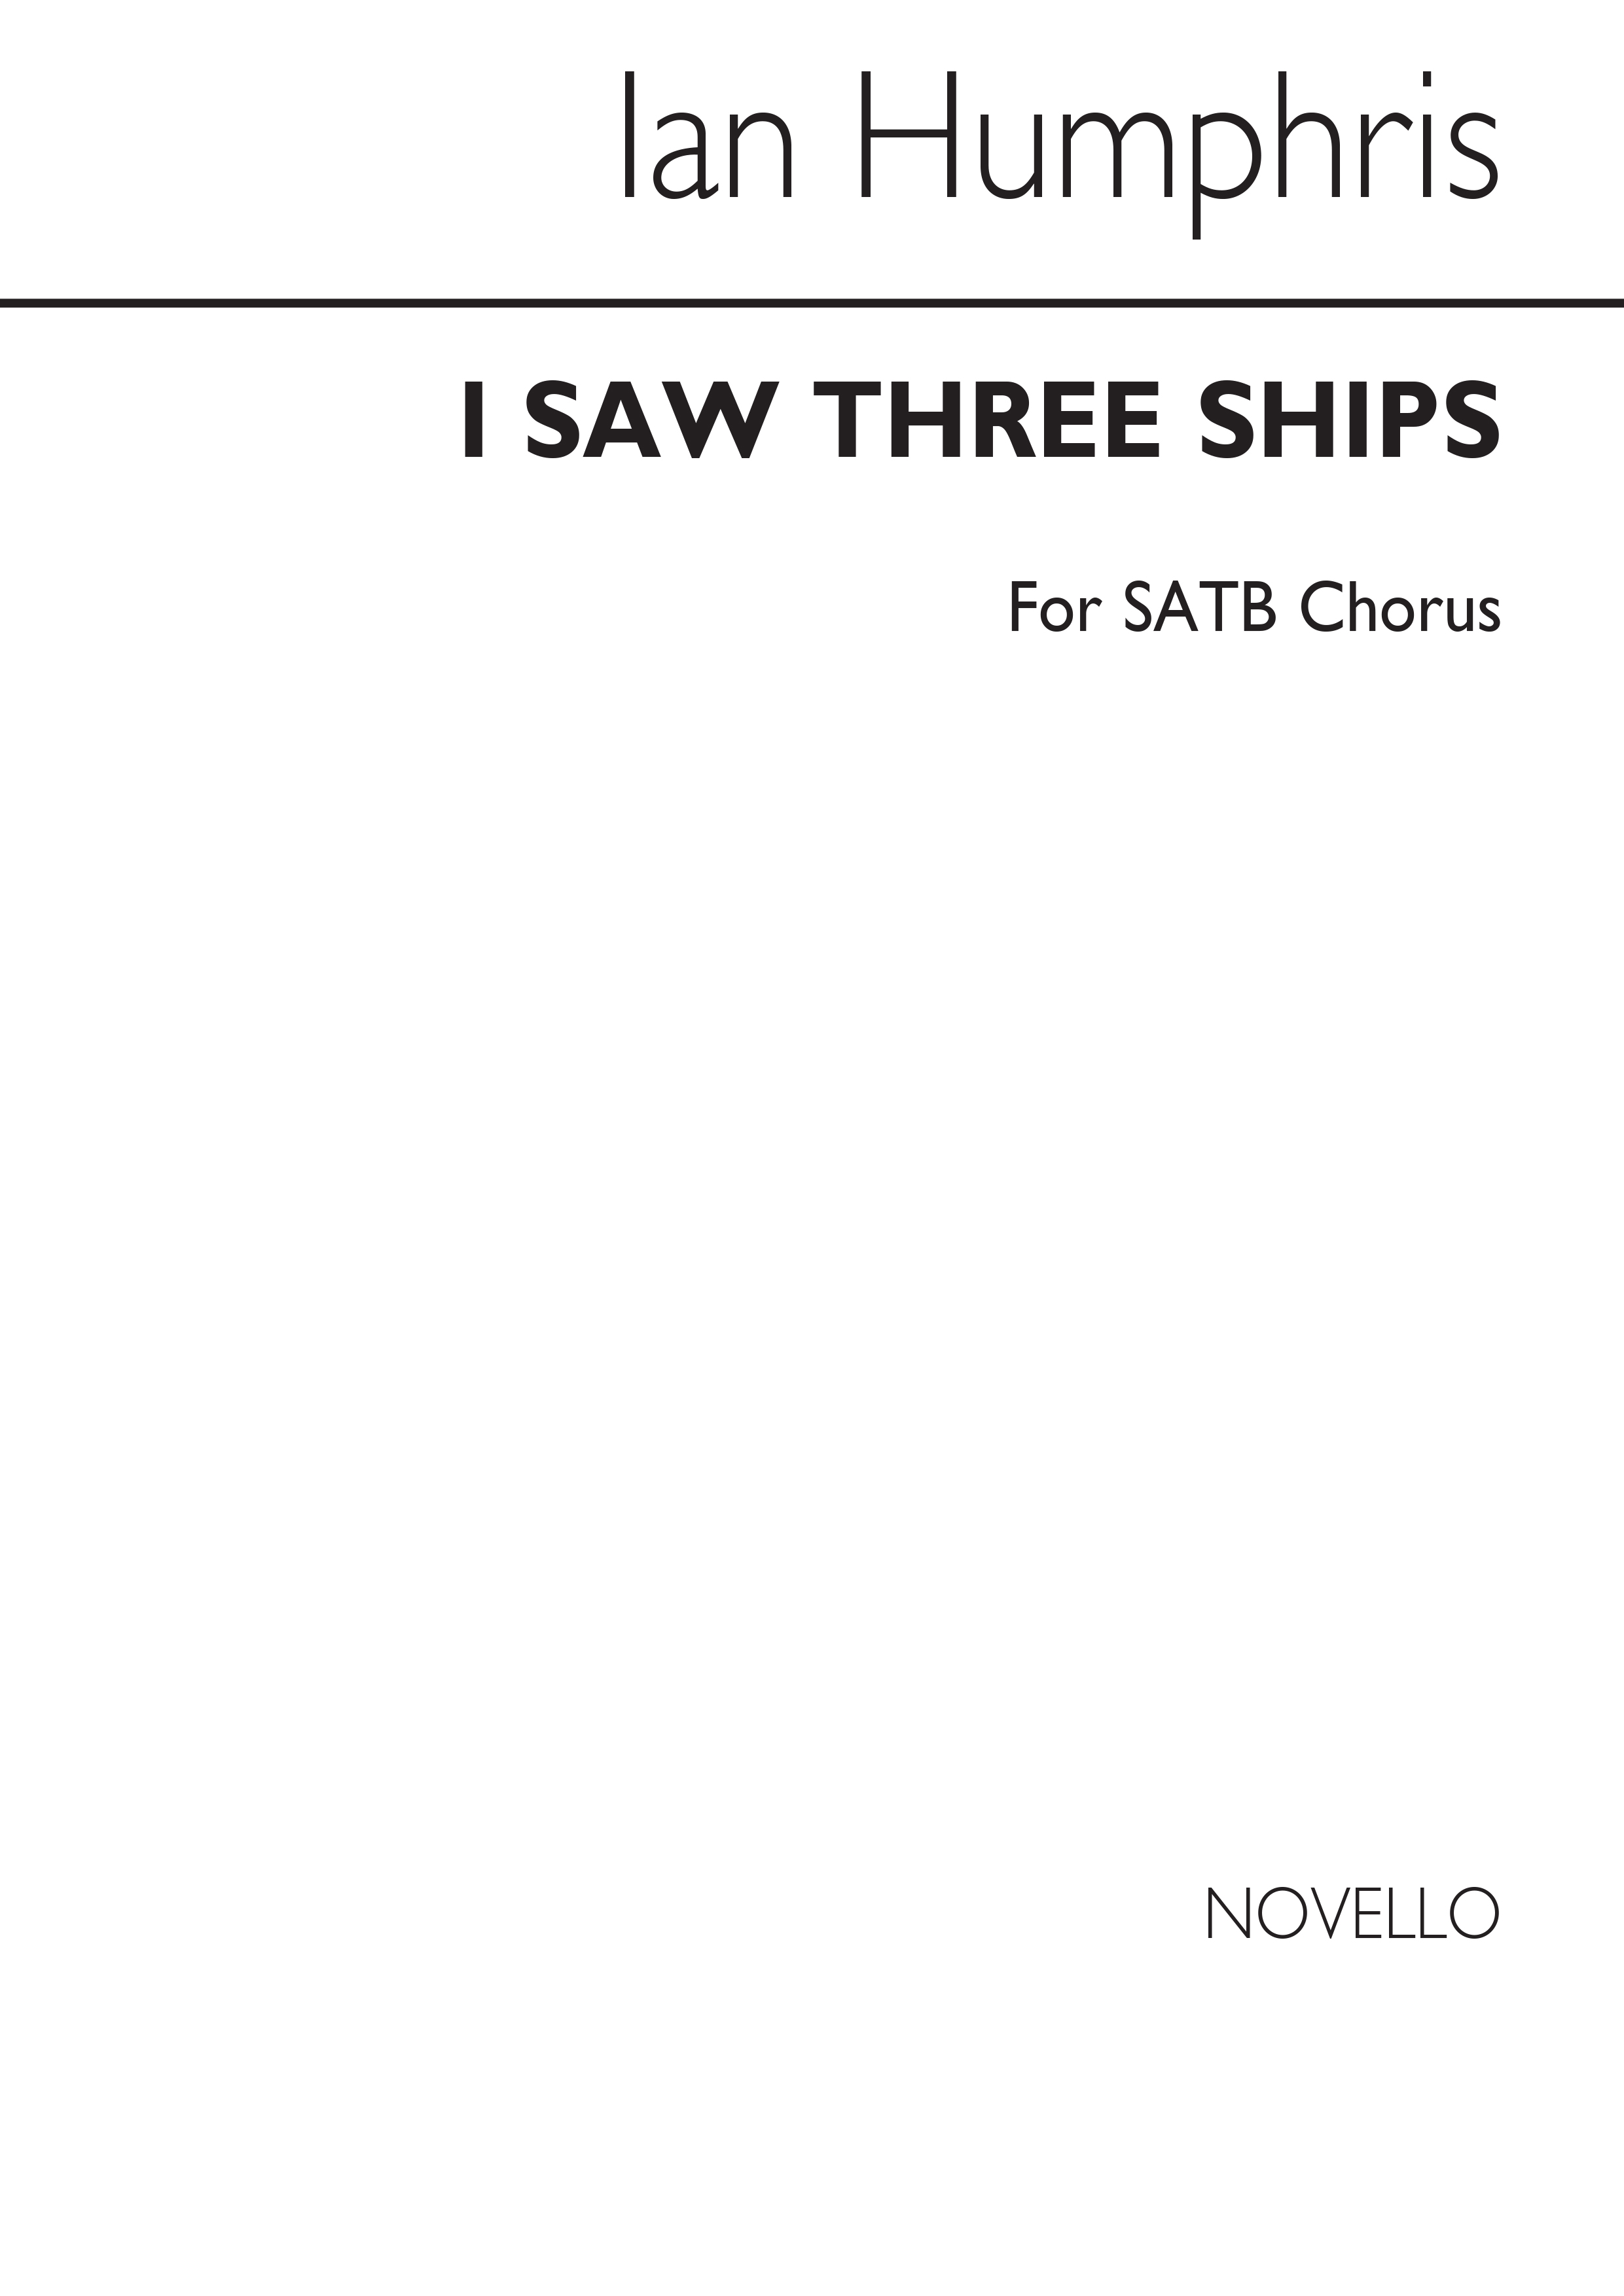 Humphris: I Saw Three Ships for SATB Chorus